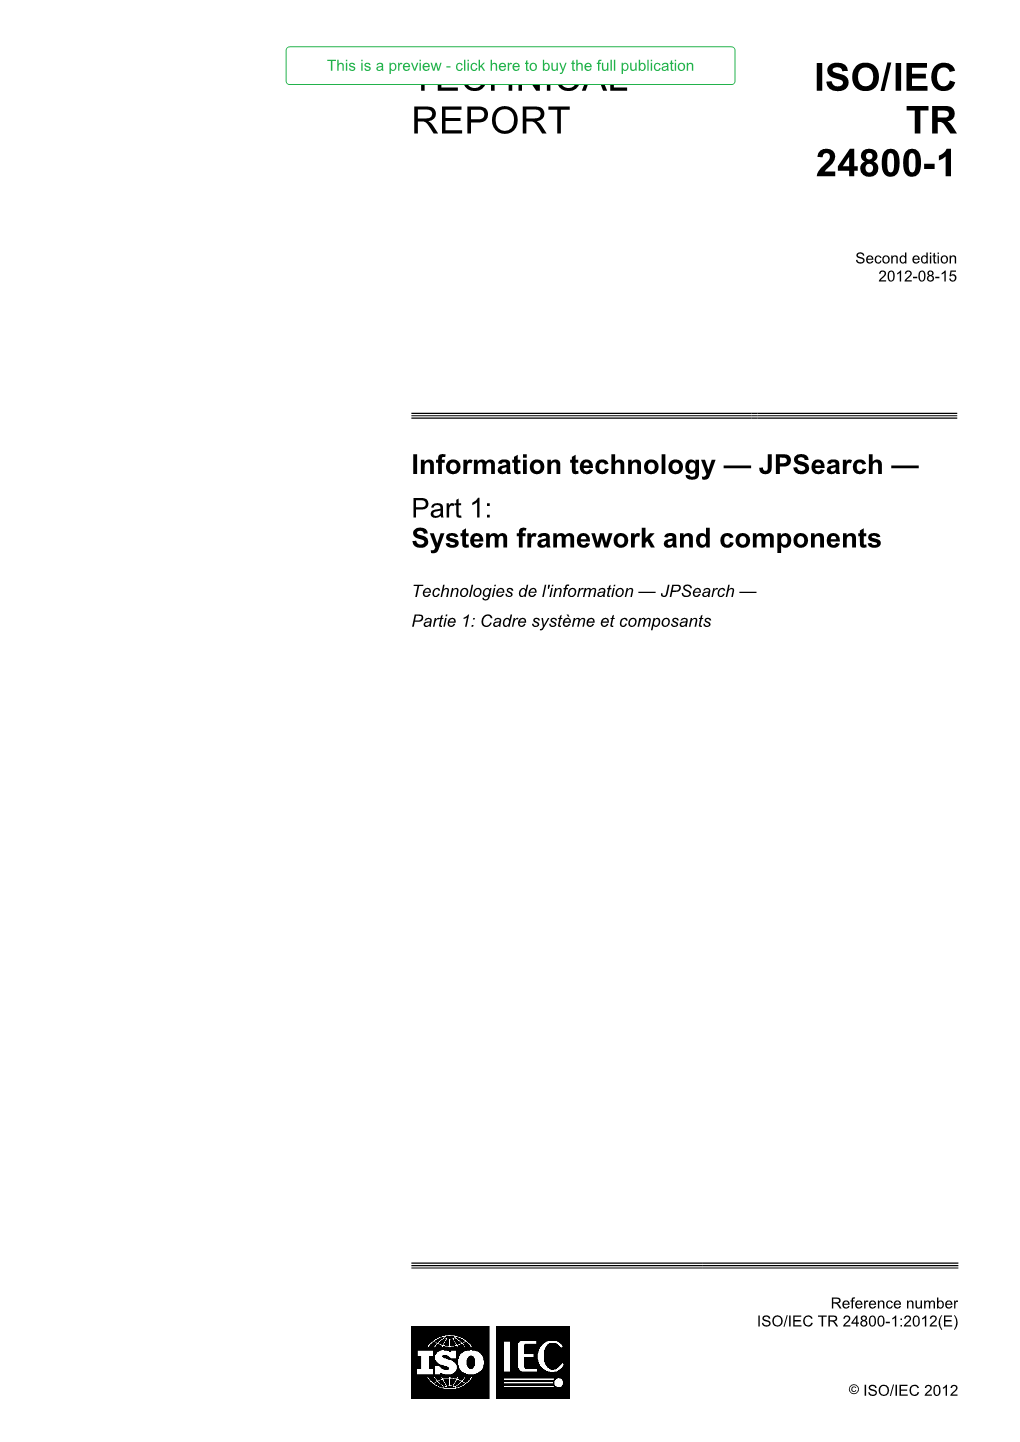 Technical Report Iso/Iec Tr 24800-1:2012(E)